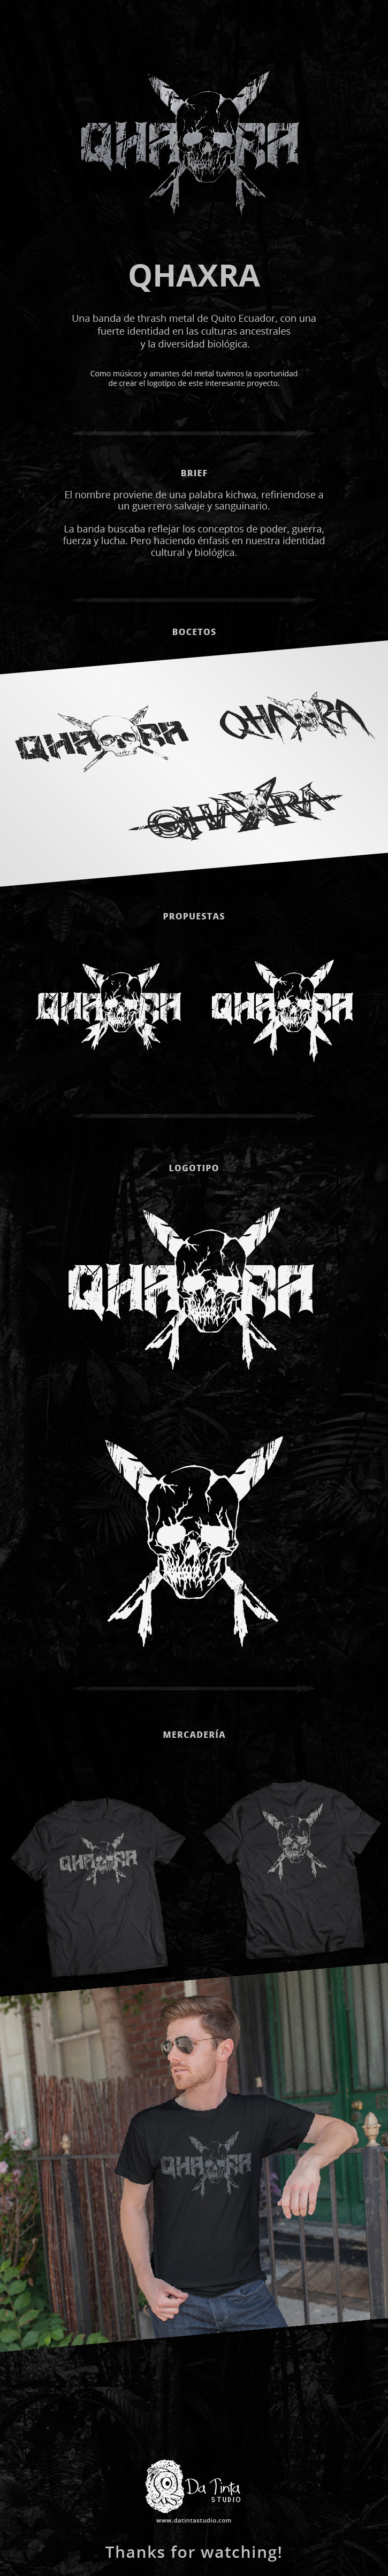 metal rock quichua trash musica Logotipo cultura Ecuador selva naturaleza amazonia